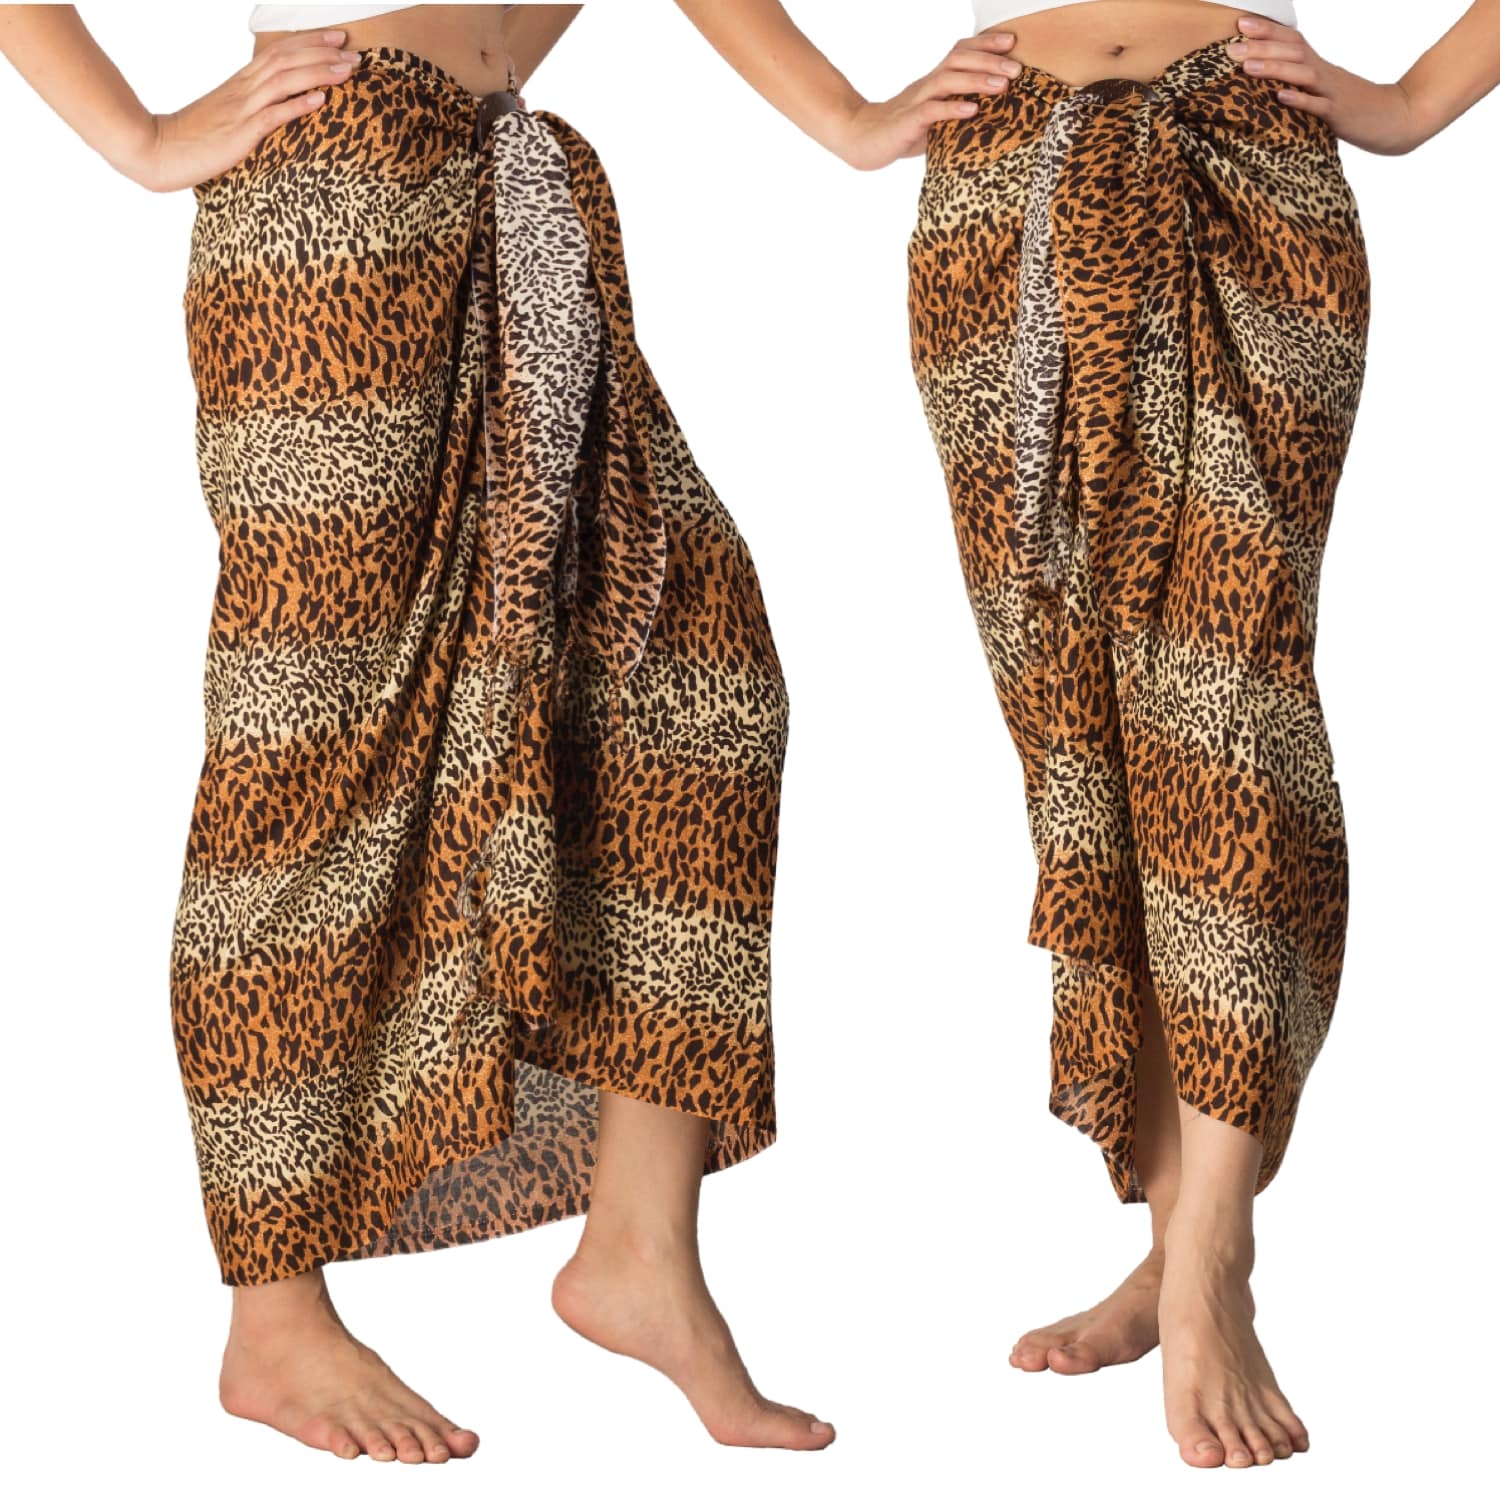 *US SELLER*lot of 5 wholesale sarong scarf shawl wrap tie dye daisy animal print 